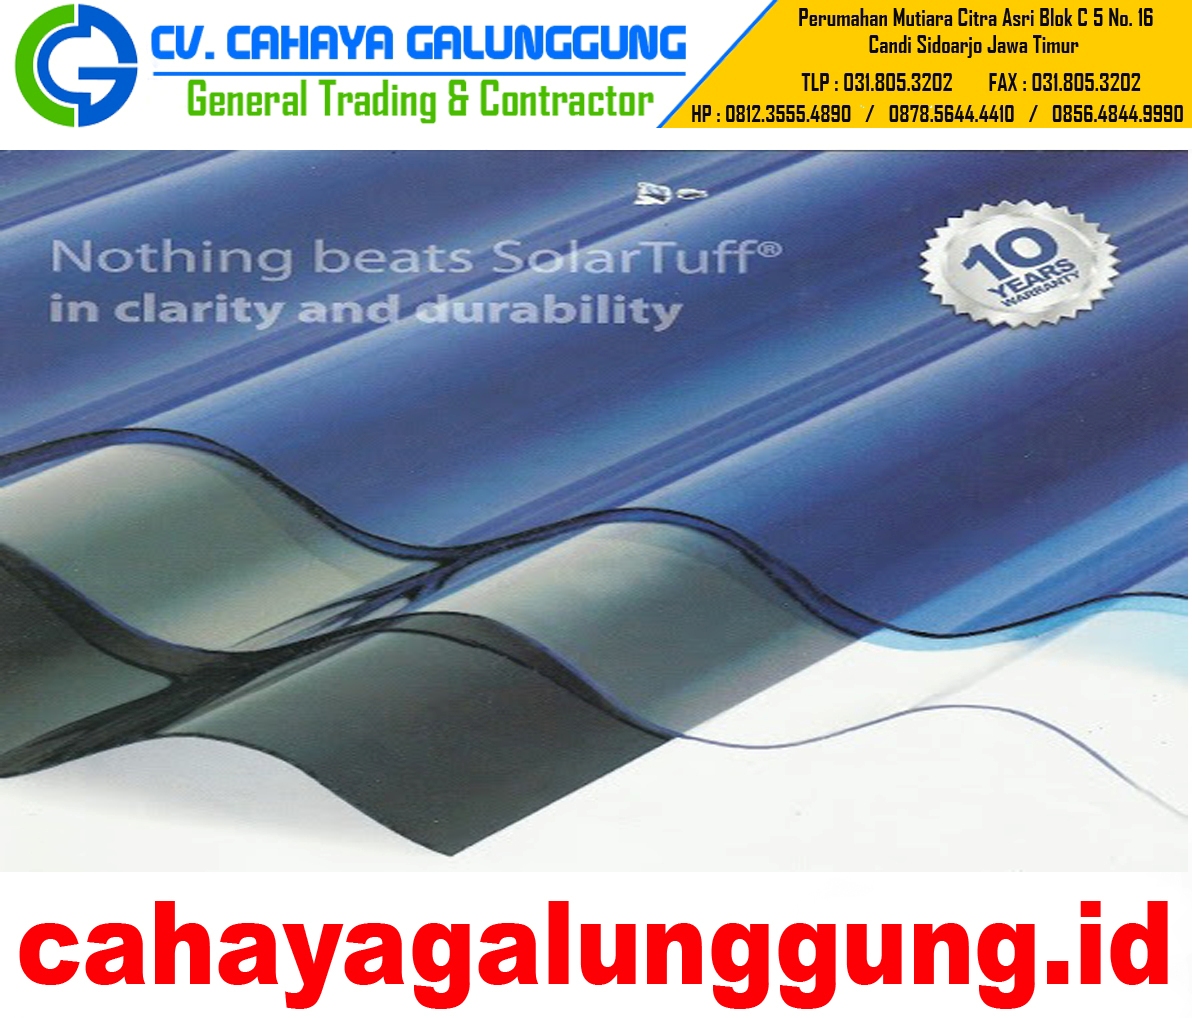 Polycarbonate Solartuff  CV CAHAYA GALUNGGUNG